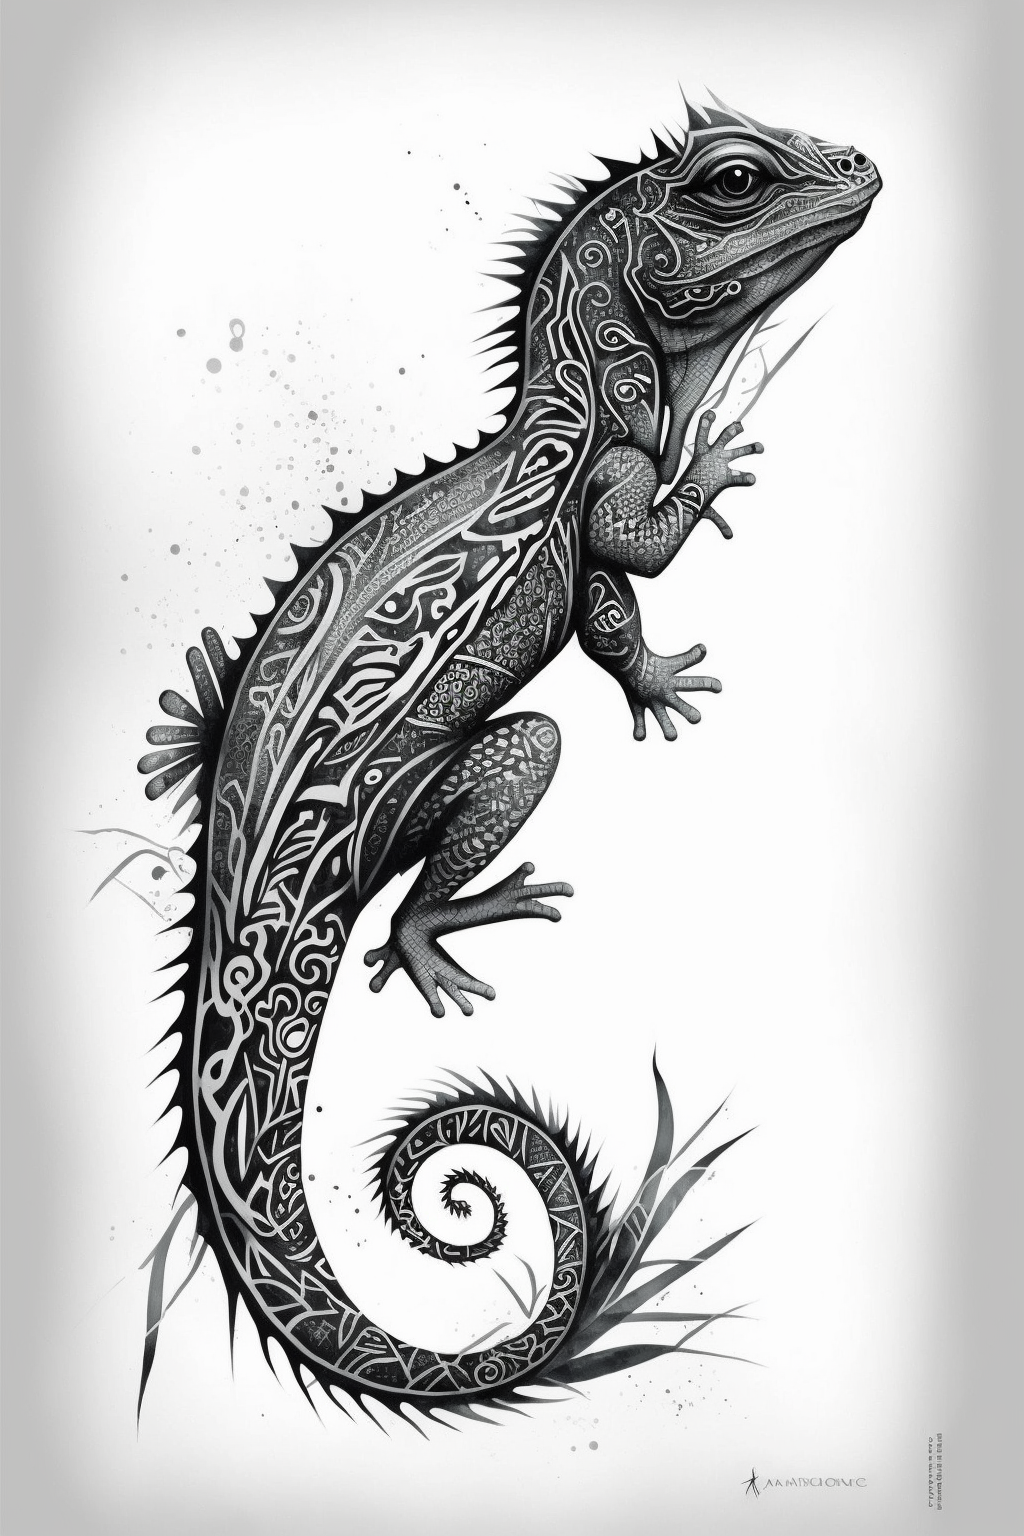 Lizard Sketch Stock Illustrations, Cliparts and Royalty Free Lizard Sketch  Vectors